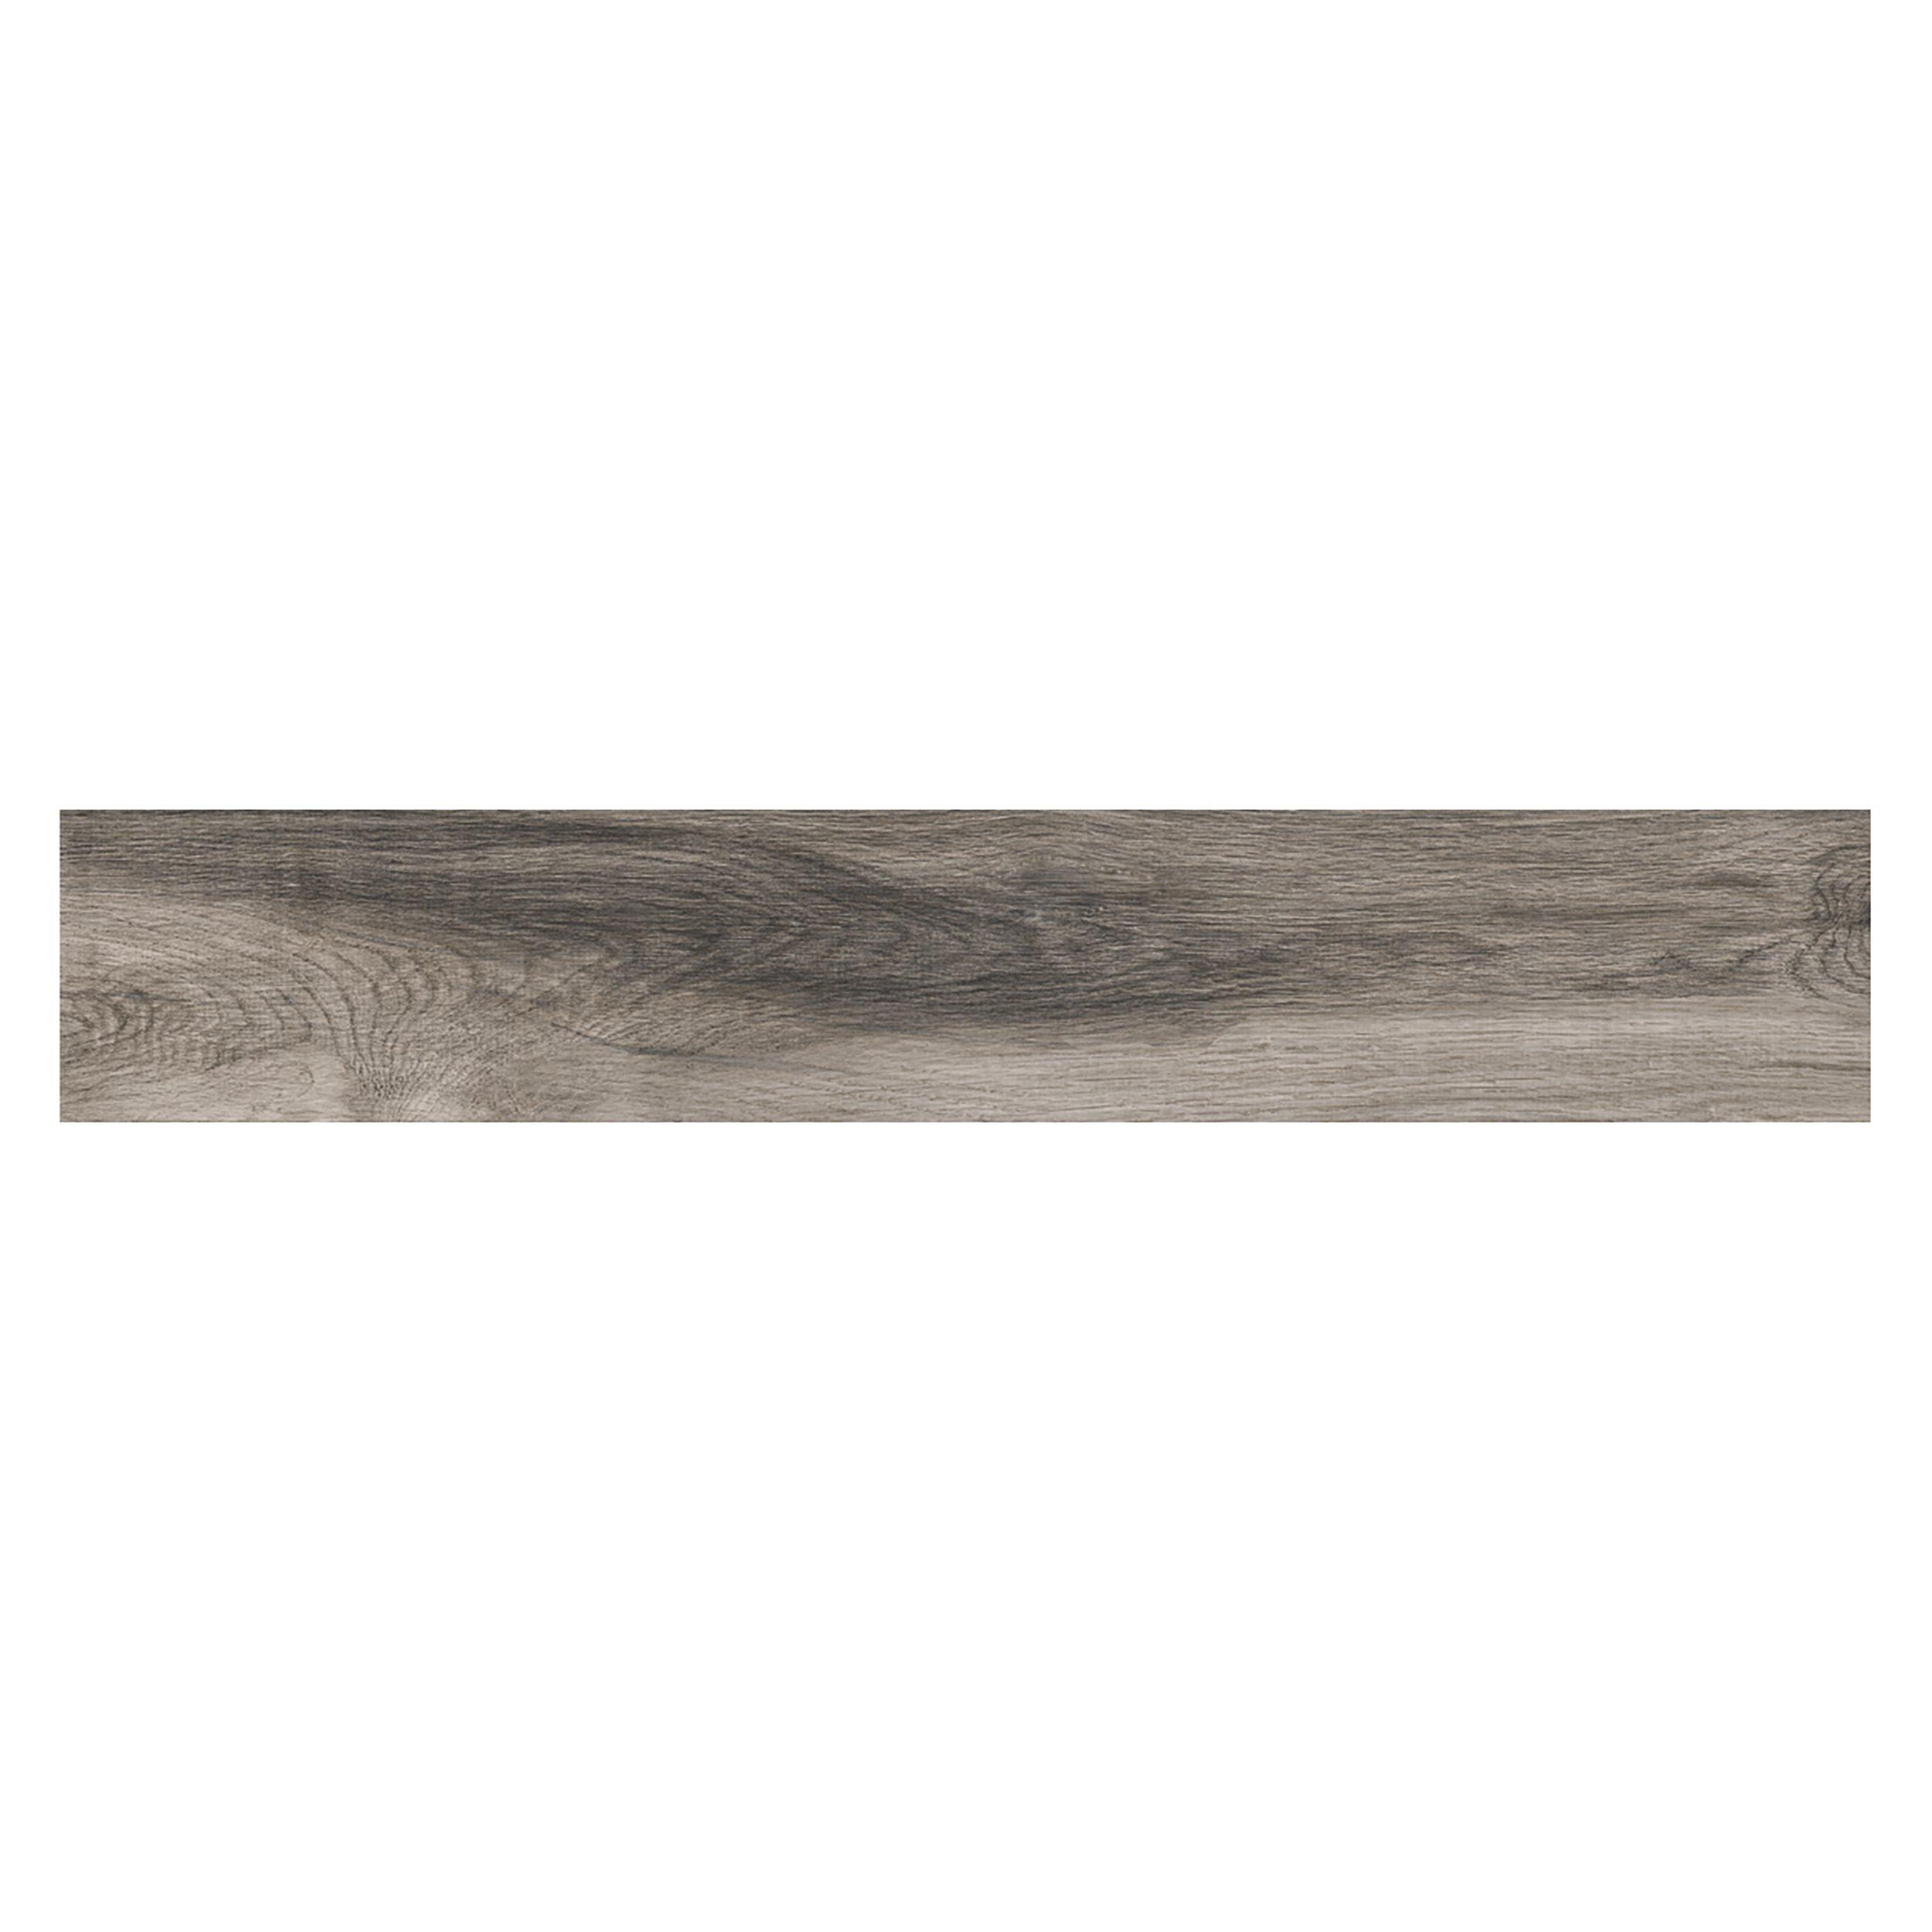 Chesterfield Gray II Wood Plank Ceramic Tile